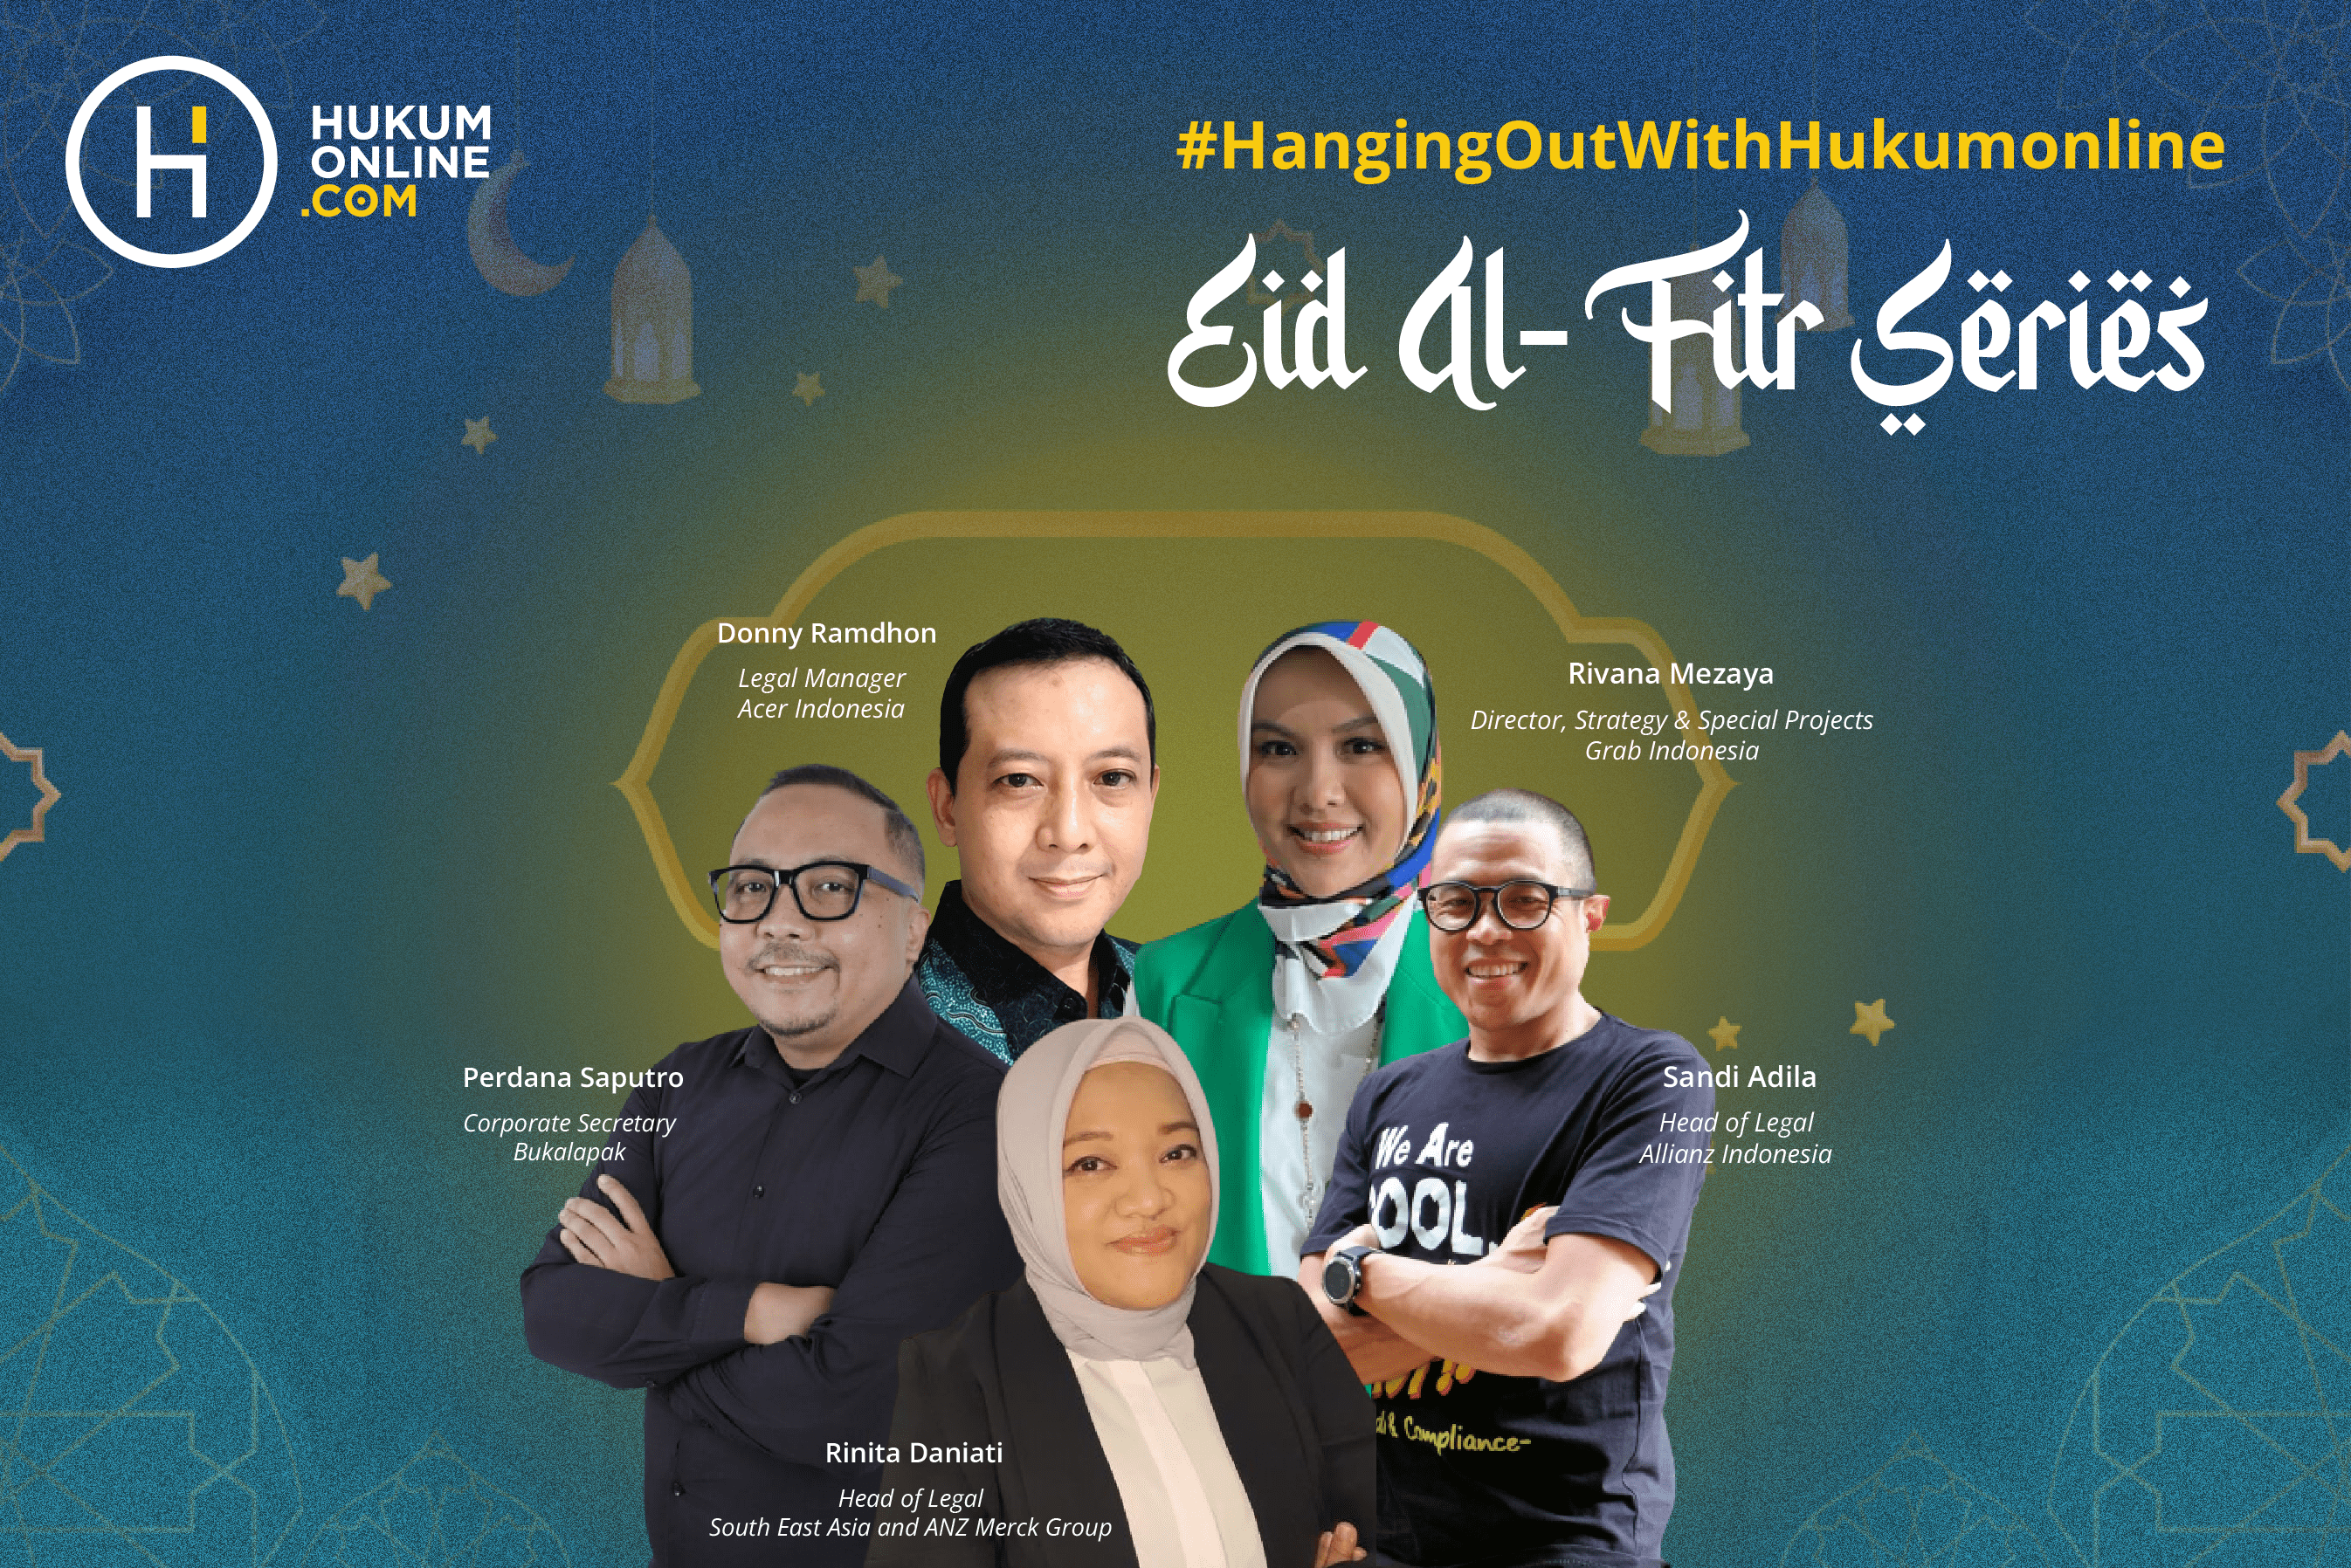 Foto: Hukumonline, #HangingOutWithHukumonline Eid Al Fitr Series